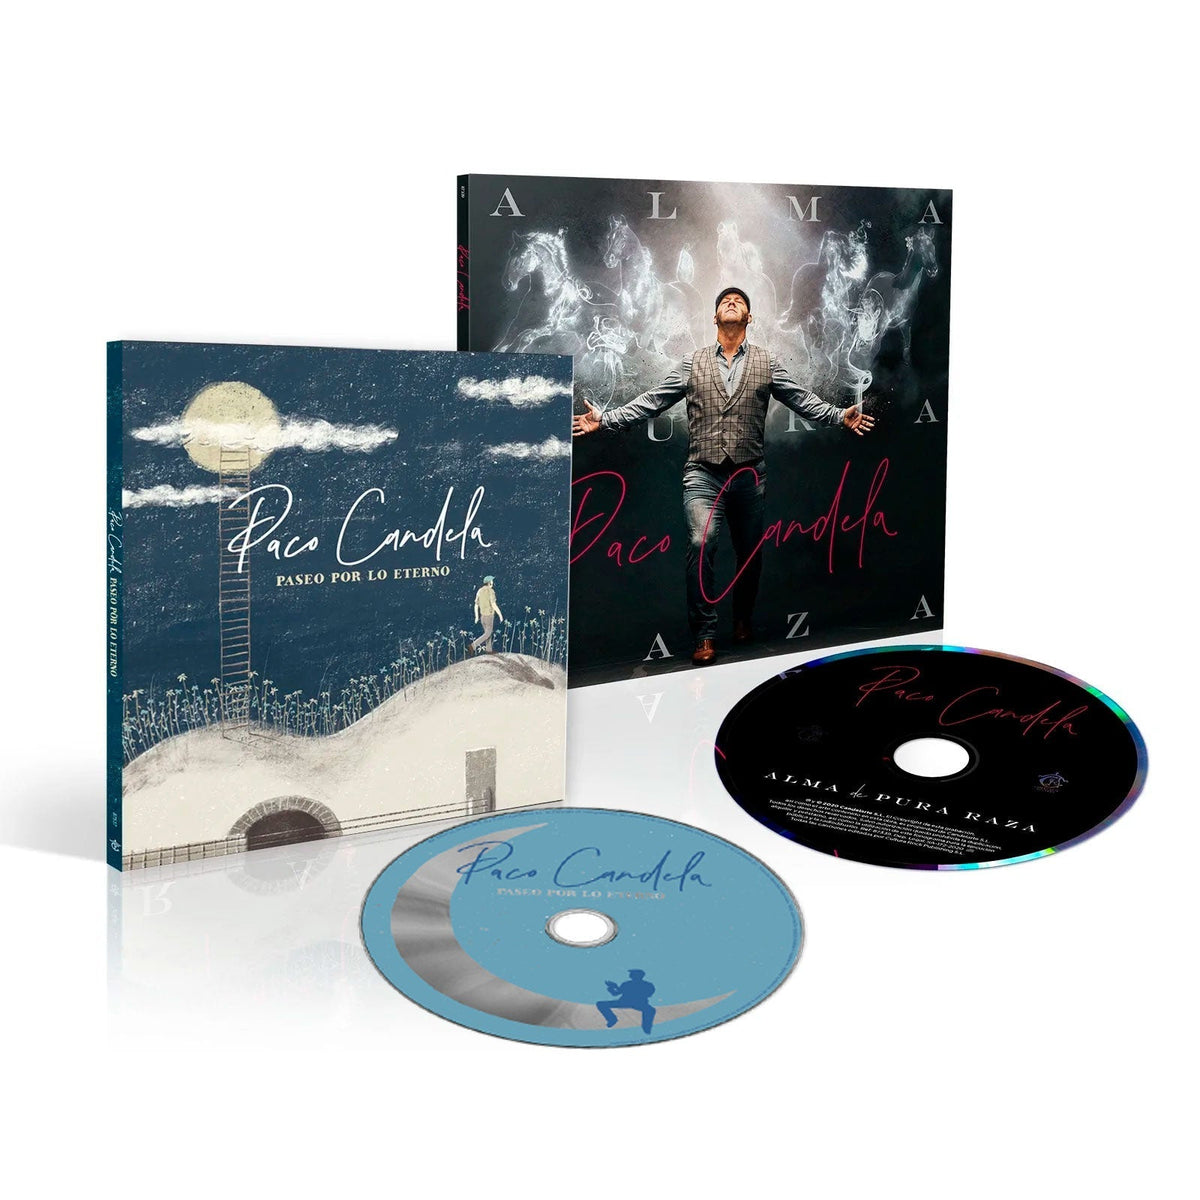 Pack Paco Candela - CD Digifile Deluxe “Paseo Por Lo Eterno” + CD "Alma de Pura Raza" - Rocktud - Paco Candela